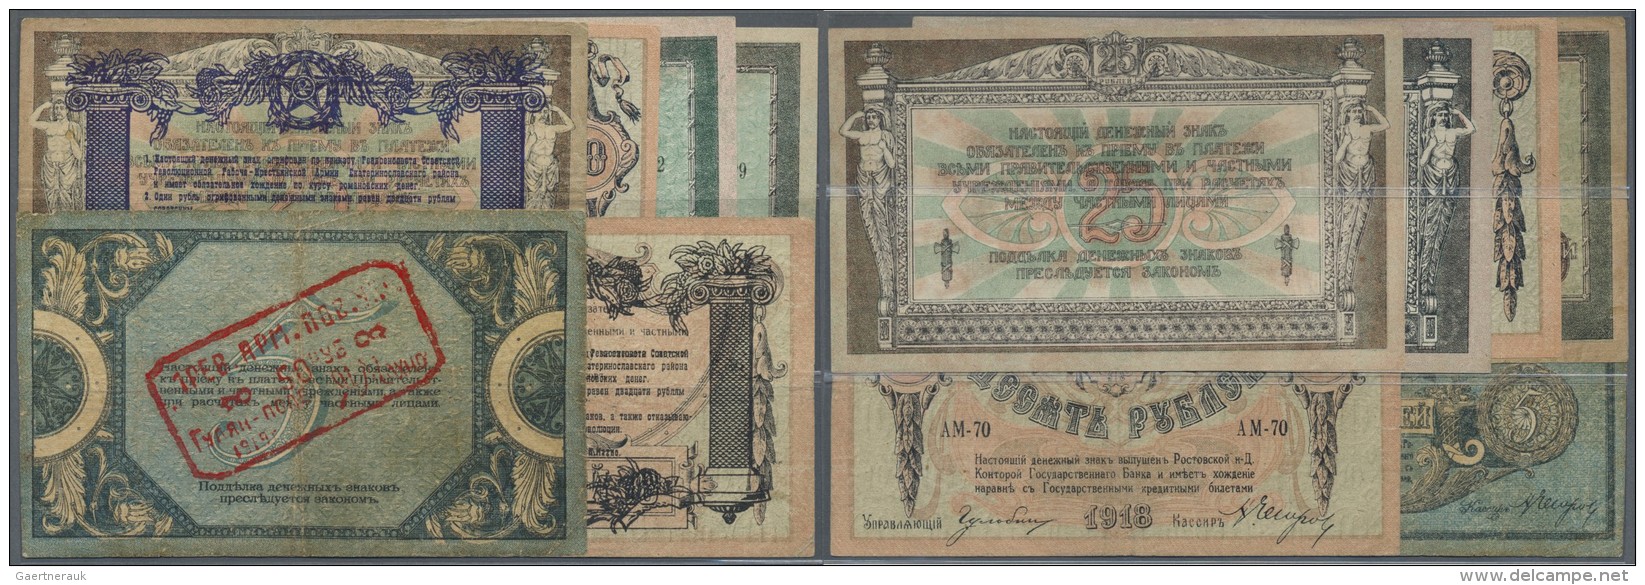 Ukraina / Ukraine: Huljajpole, Ekaterinoslav, So Called "MAKHNO" Overprint On Rostov On Don 5 Rubles P.S410 (R 14110), C - Ukraine